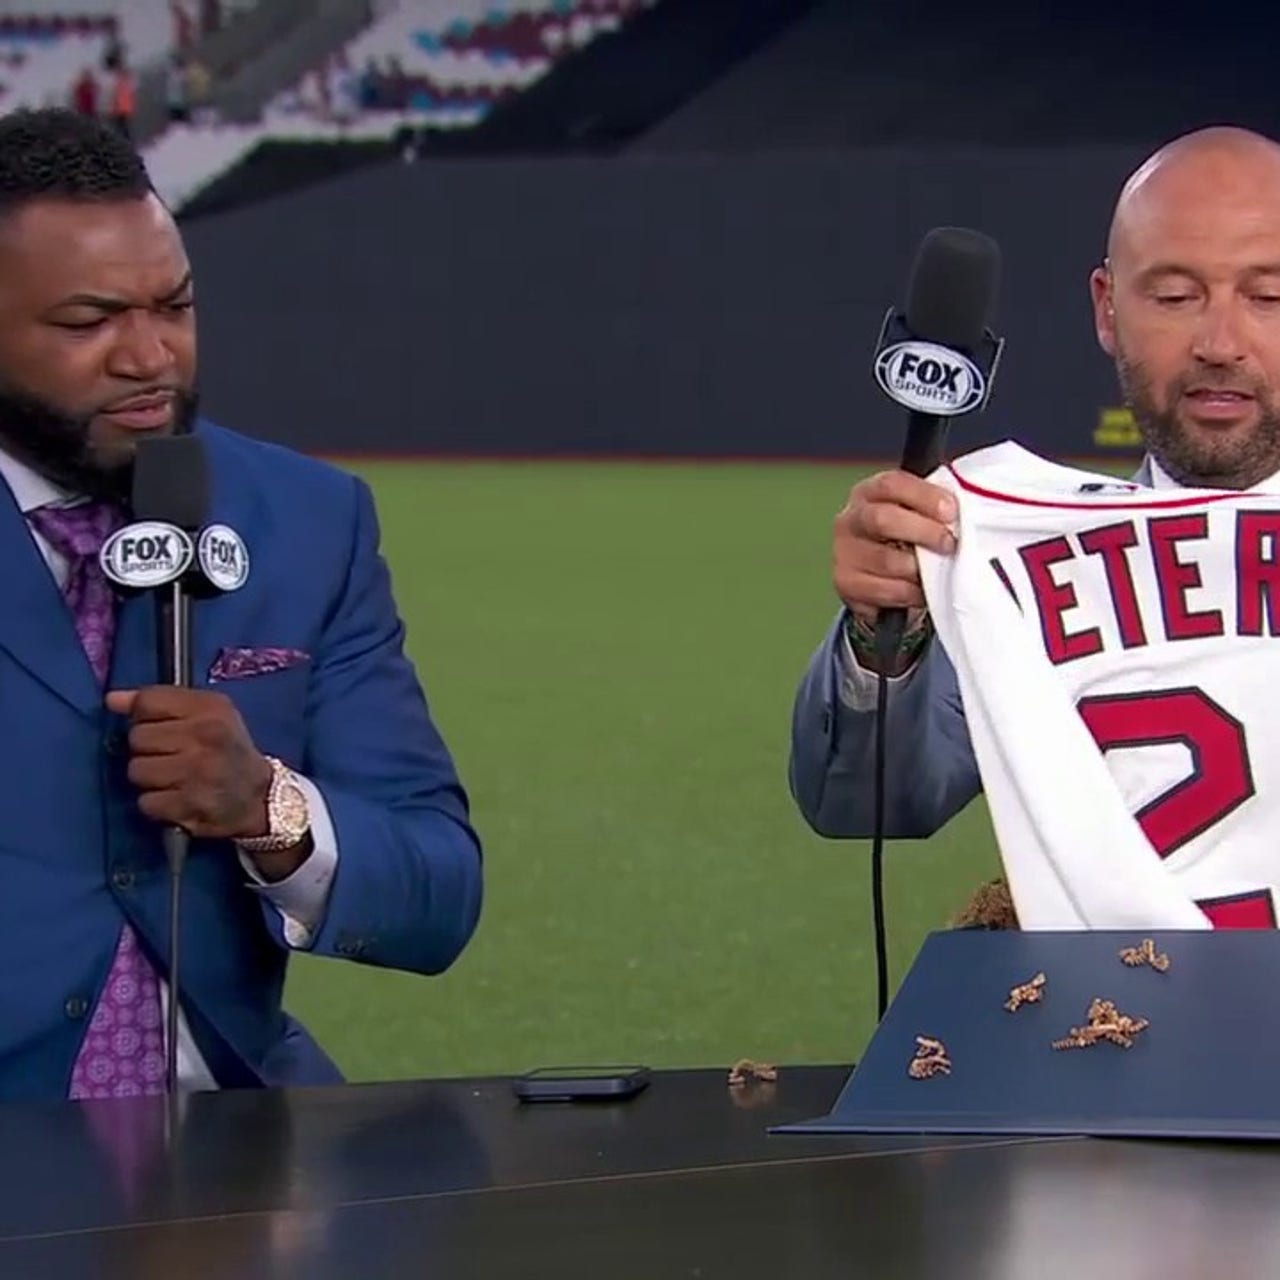 David Ortiz gifts Derek Jeter a Boston Red Sox jersey on his